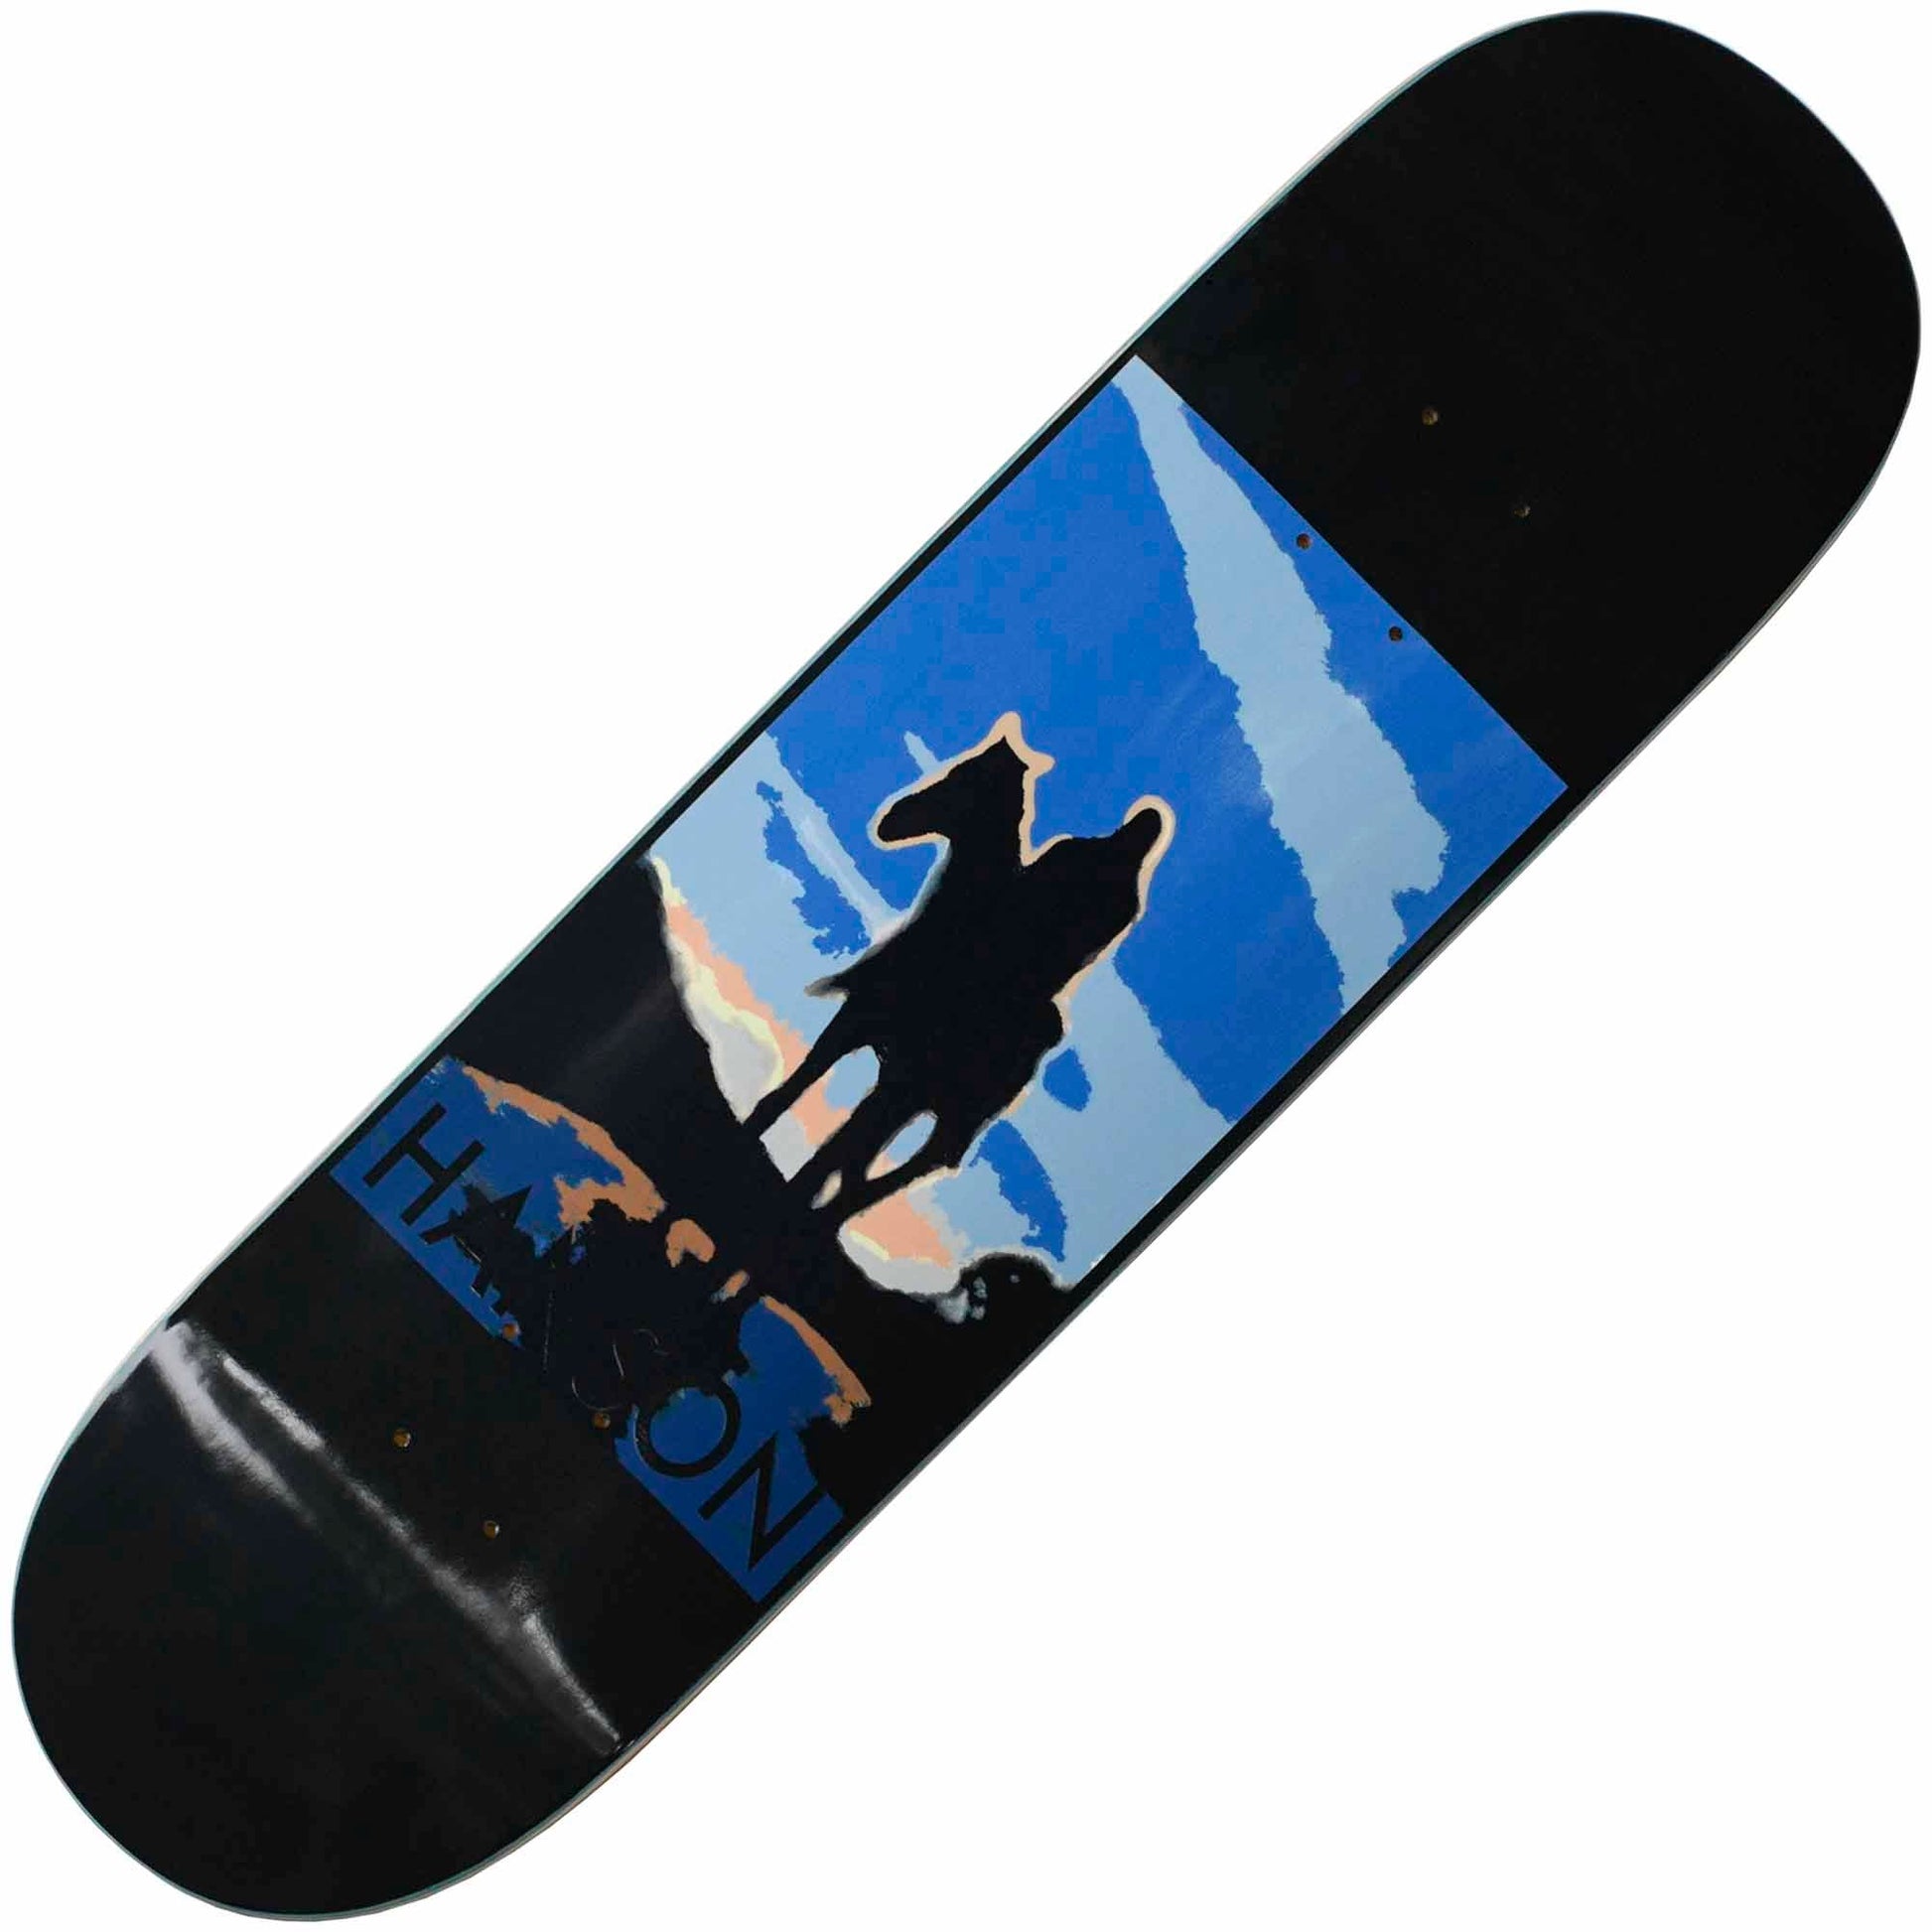 Jenny Magnus Hanson Dark Rider Deck (8.25") - Tiki Room Skateboards - 1